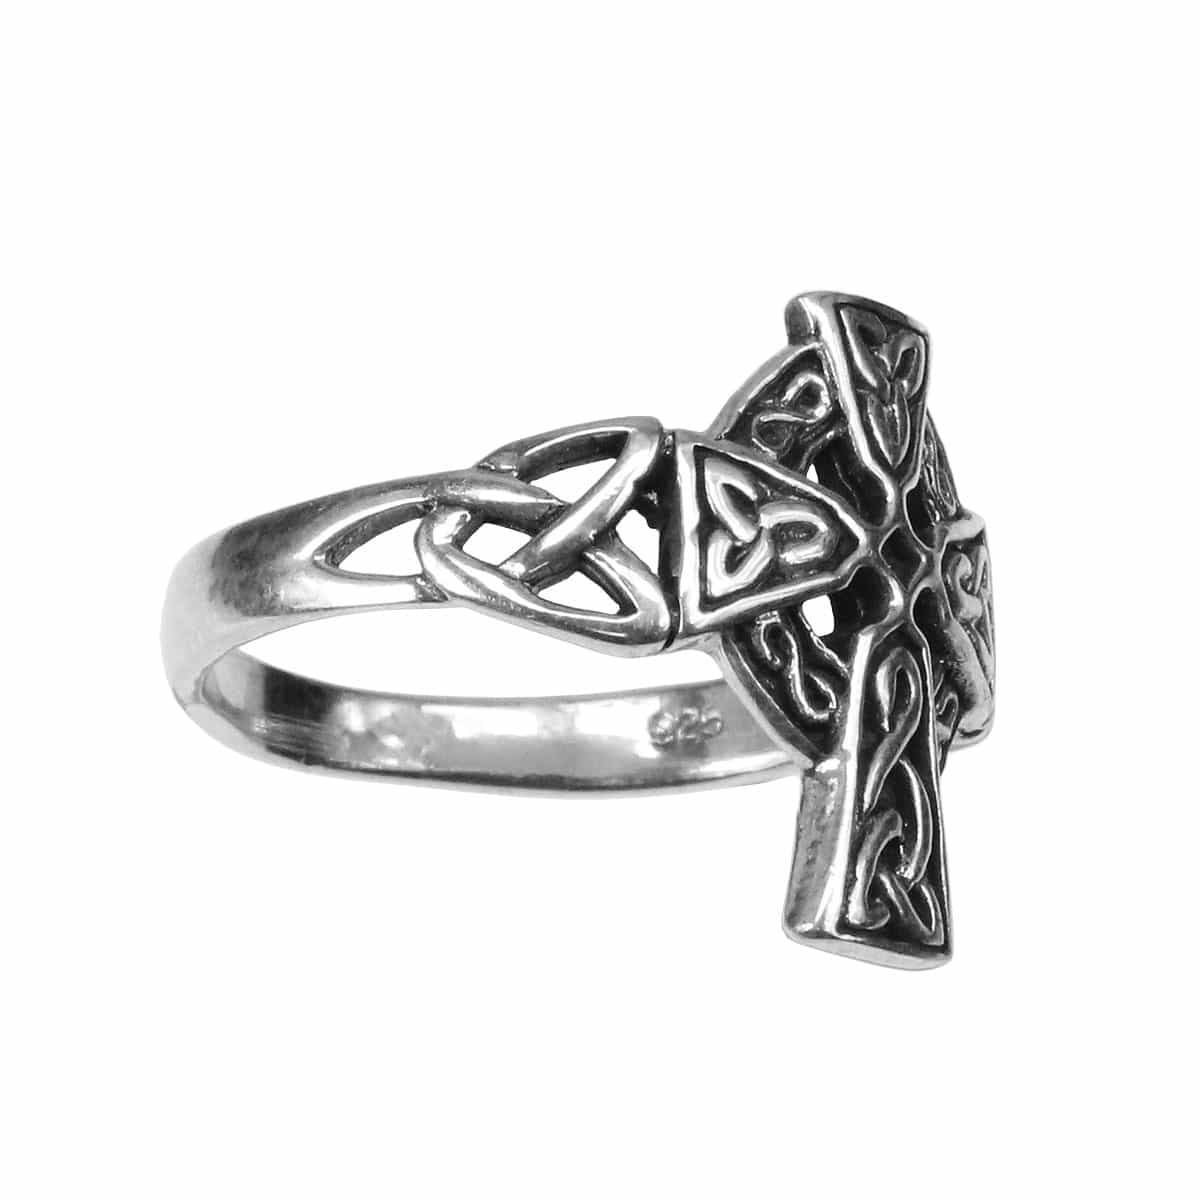 matchmaker vuurwerk Verplaatsing This Celtic Cross Ring Adds Romantic Elegance to Every Day